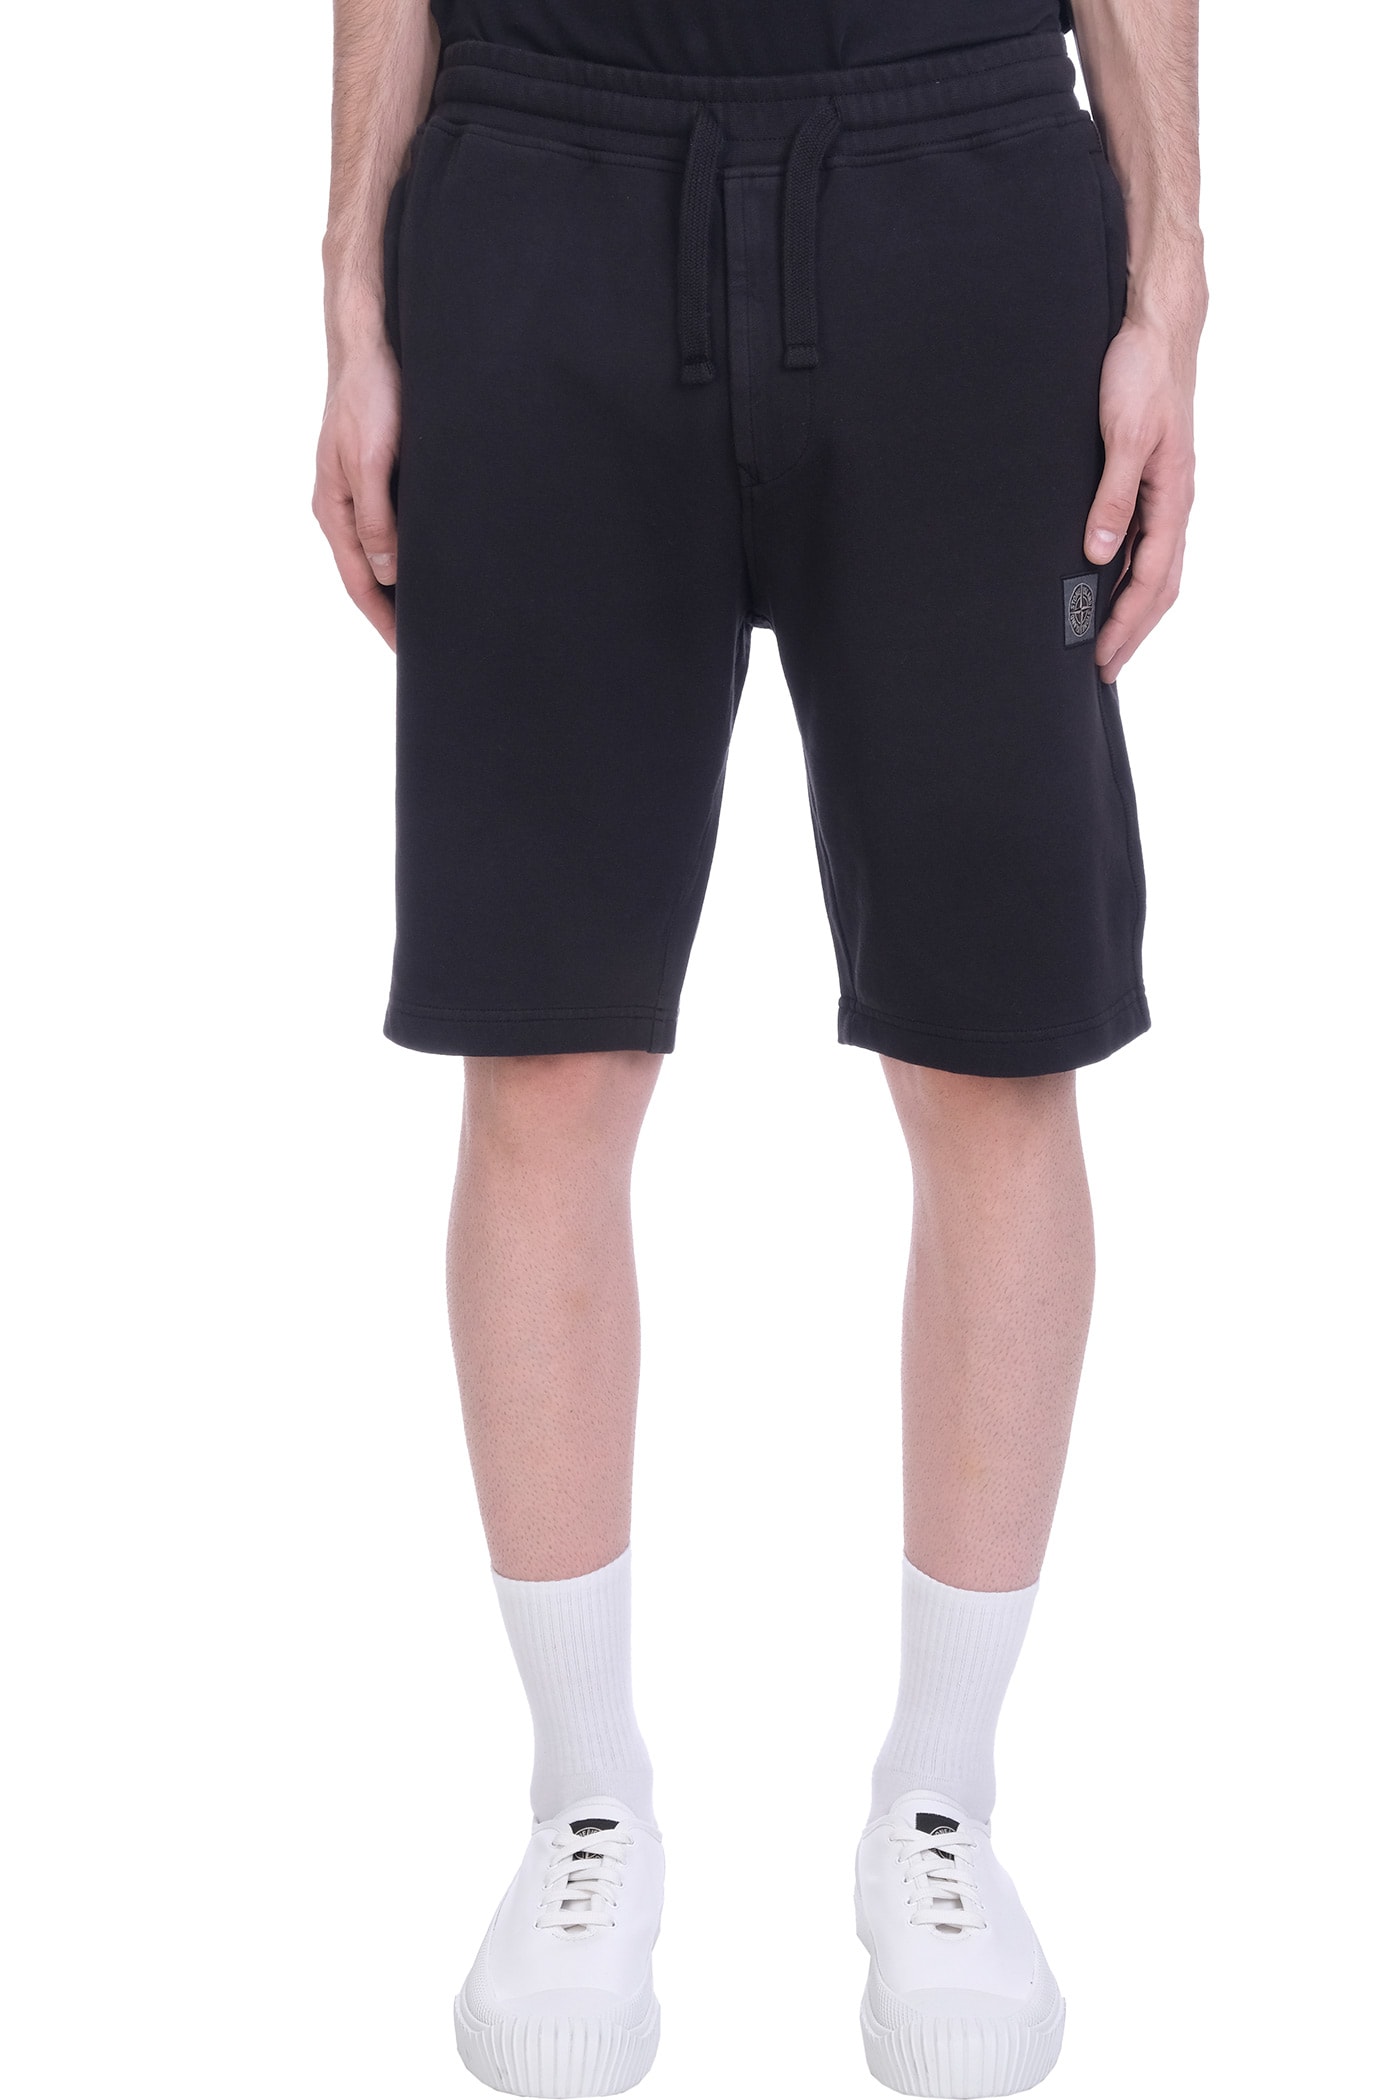 Stone Island Shorts In Black Cotton